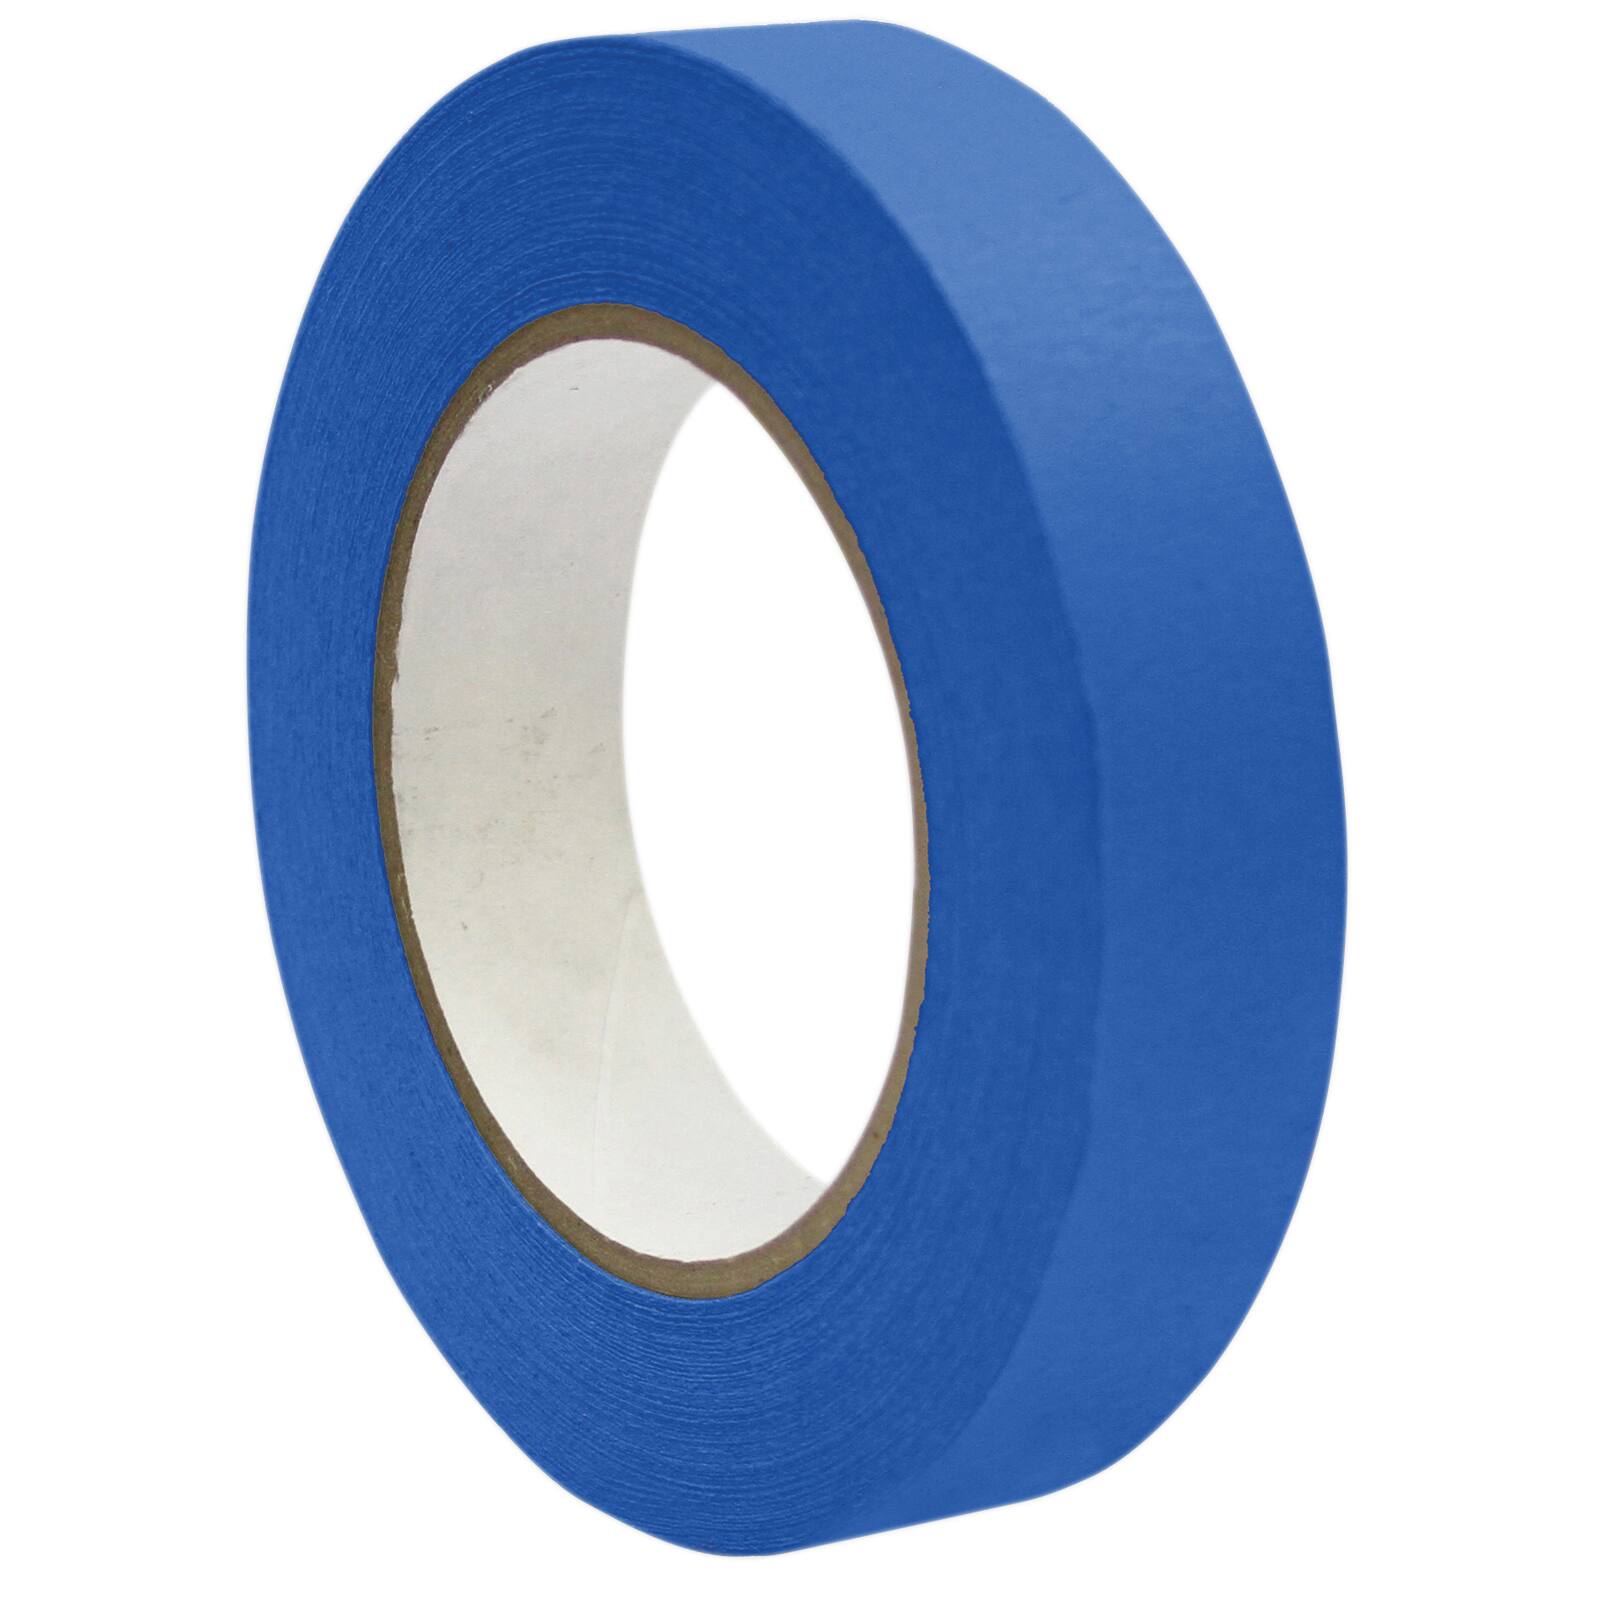 3 Packs: 6 ct. (18 total) Premium Grade Blue Masking Tape Rolls